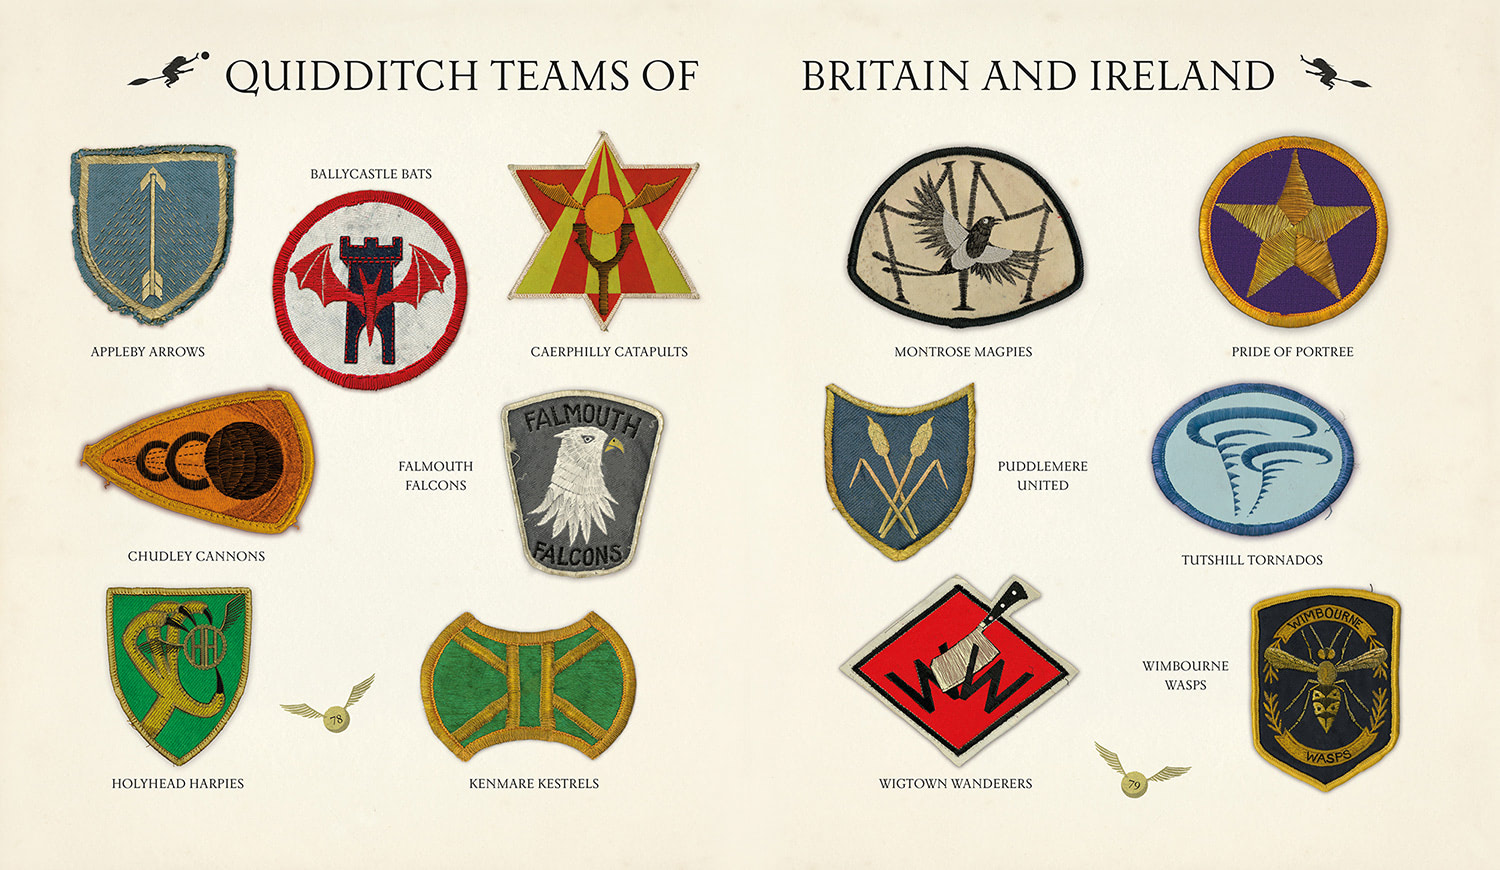 Quidditch teams of Britain and Ireland